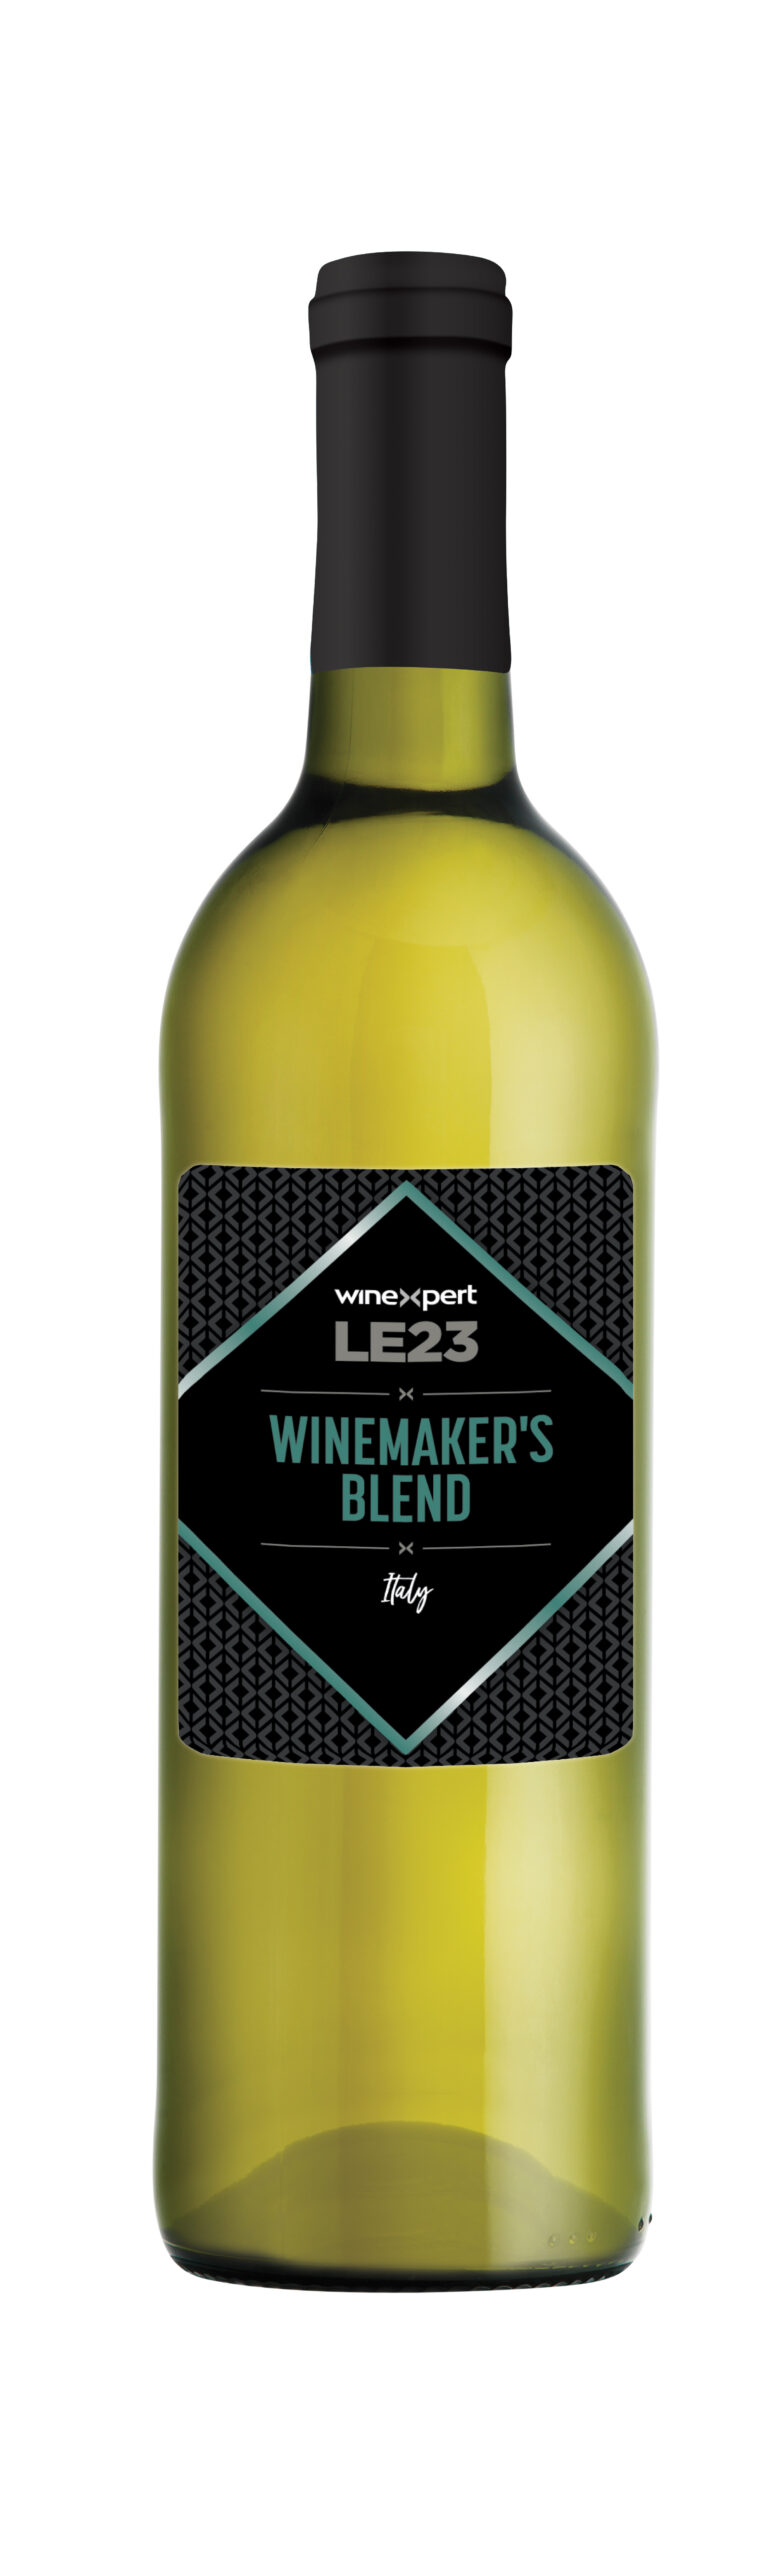 LE23 White Winemakers Blend_HI